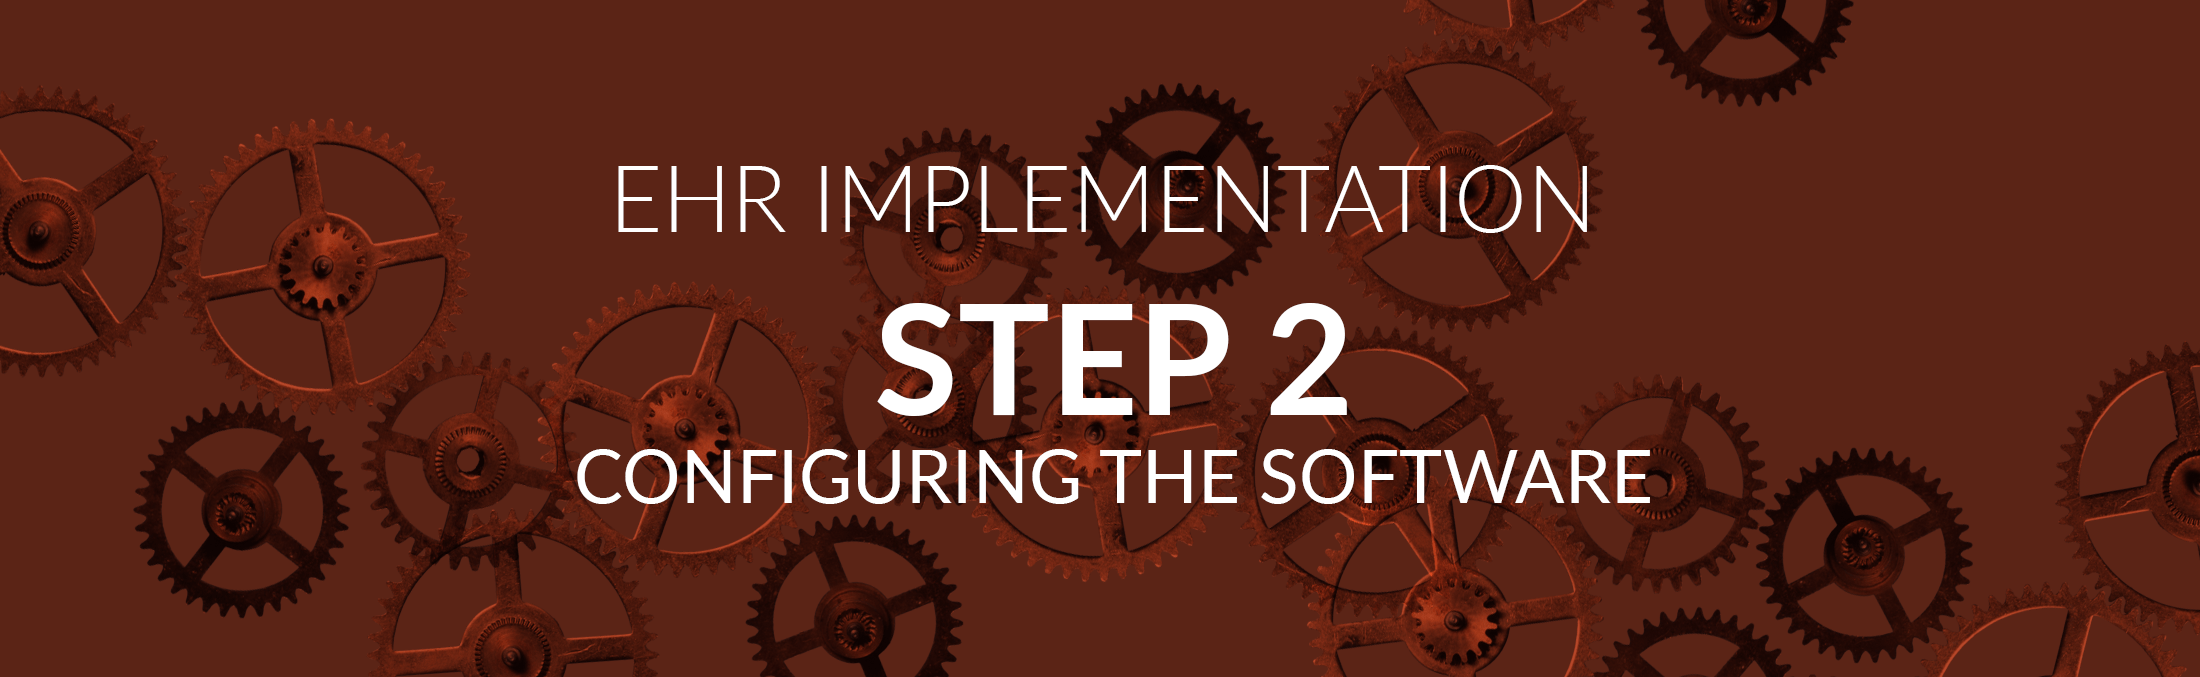 ehr implementation step 2